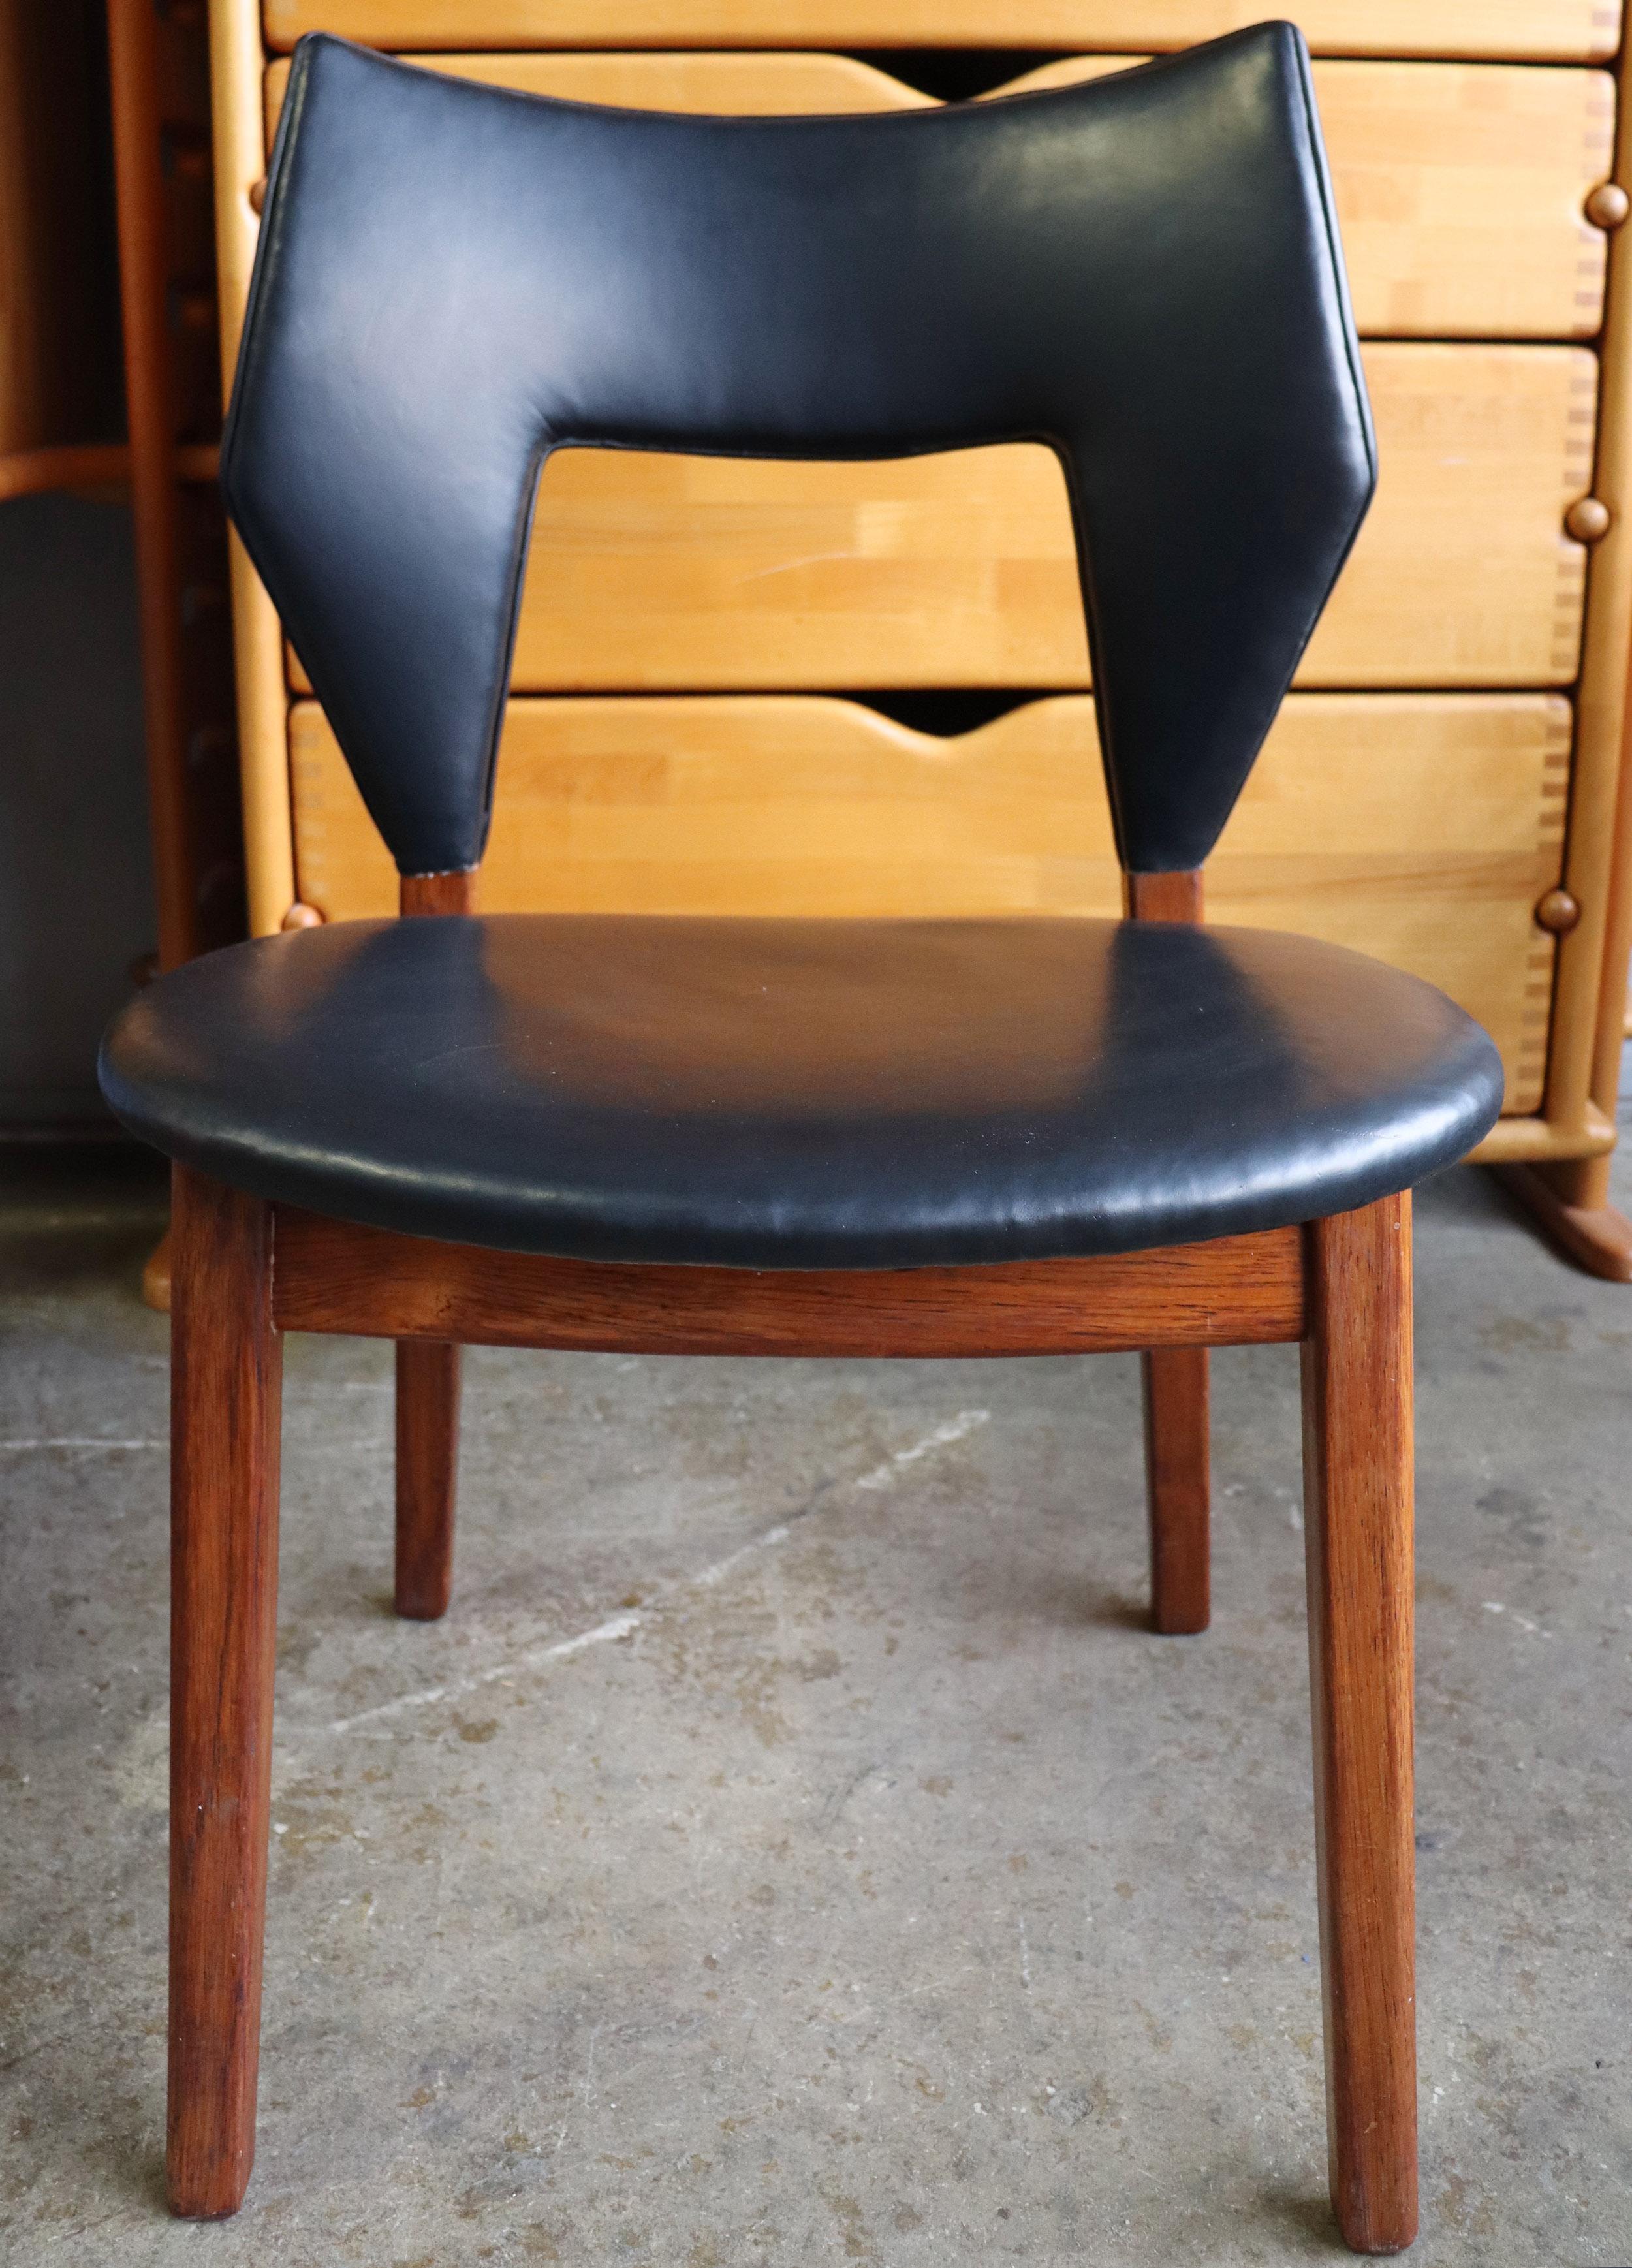 Tove & Edvard Kindt-Larsen Rosewood Chair for Thorald Madsens 1